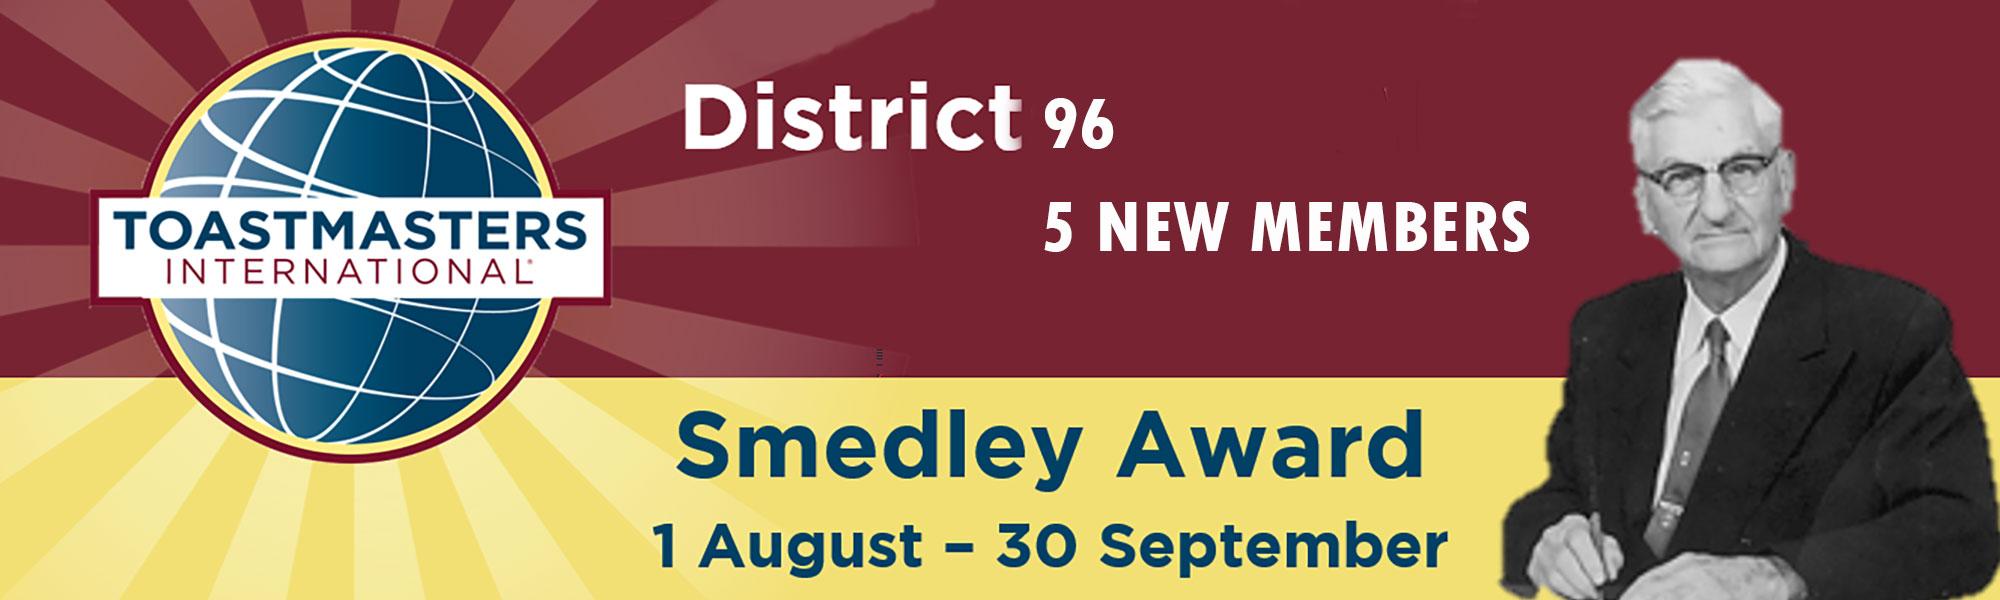 Smedley Award Banner